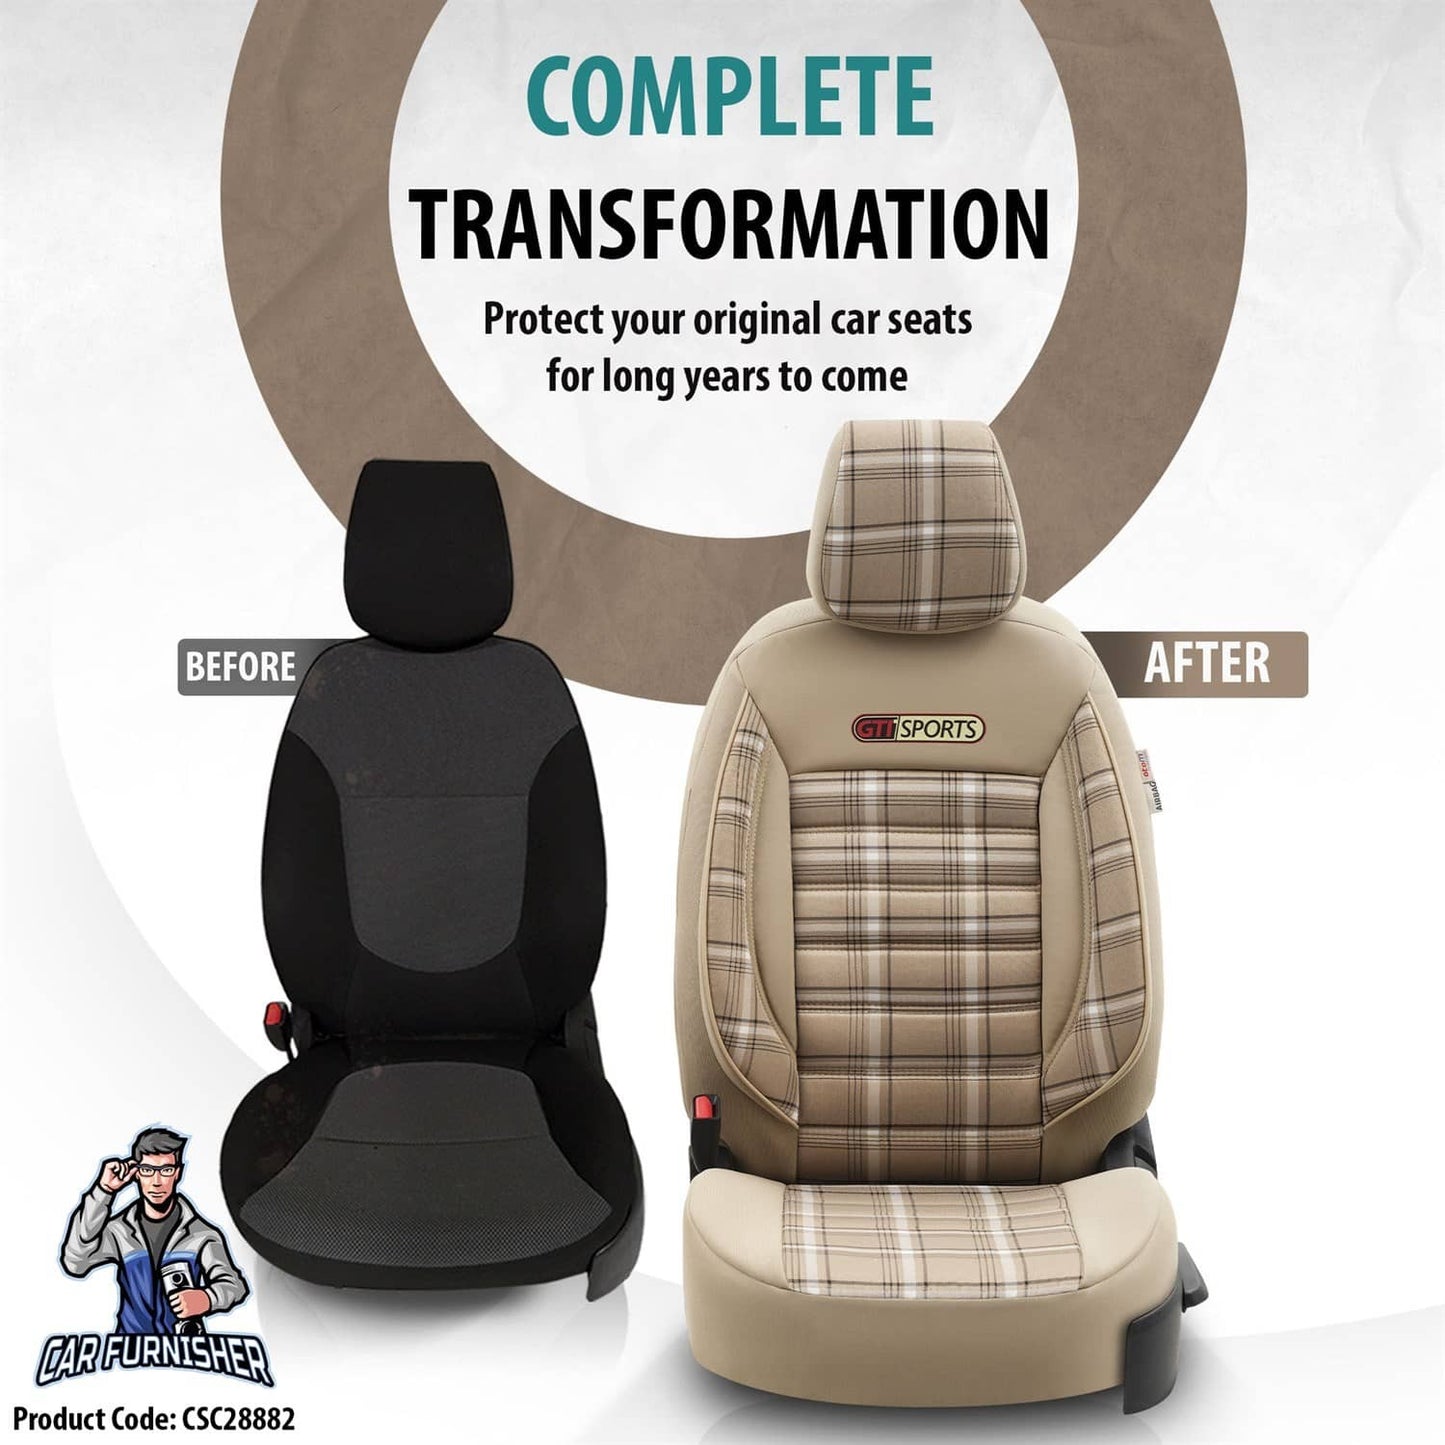 Car Seat Cover Set - Sports Design Beige 5 Seats + Headrests (Full Set) Leather & Jacquard Fabric